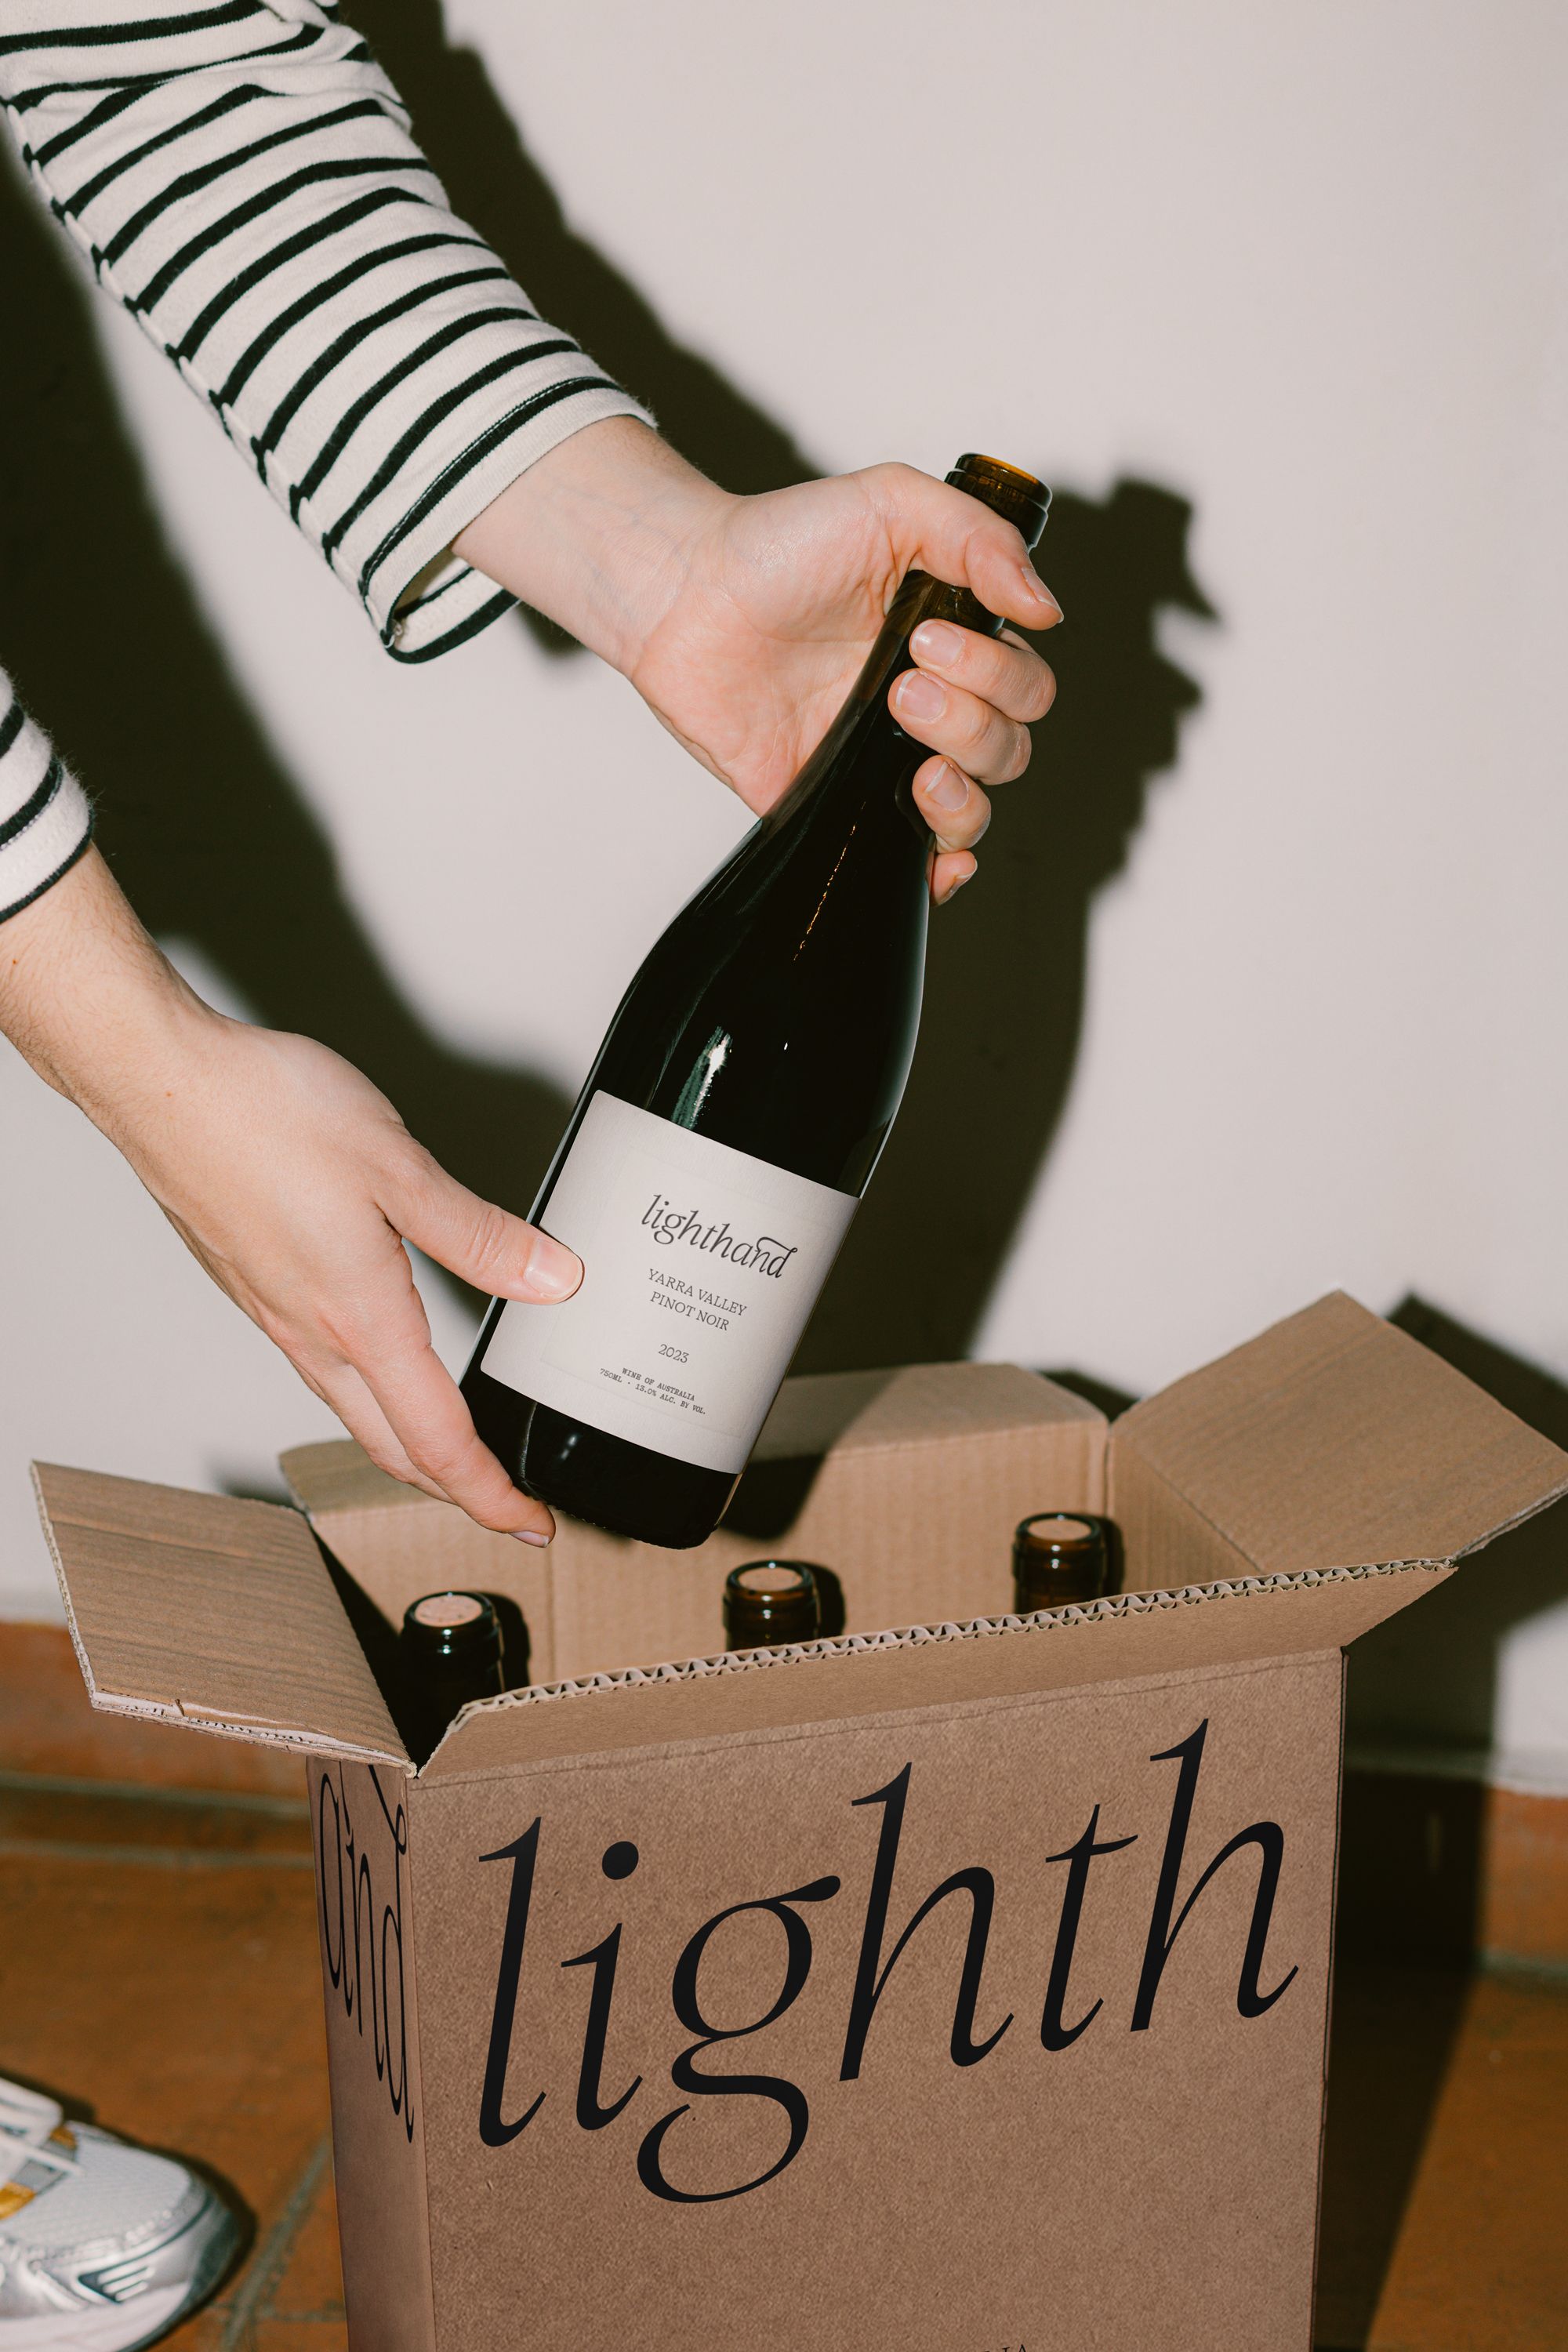 [LH01] Lighthand Wines, Brand Identity, Label & Box Design.